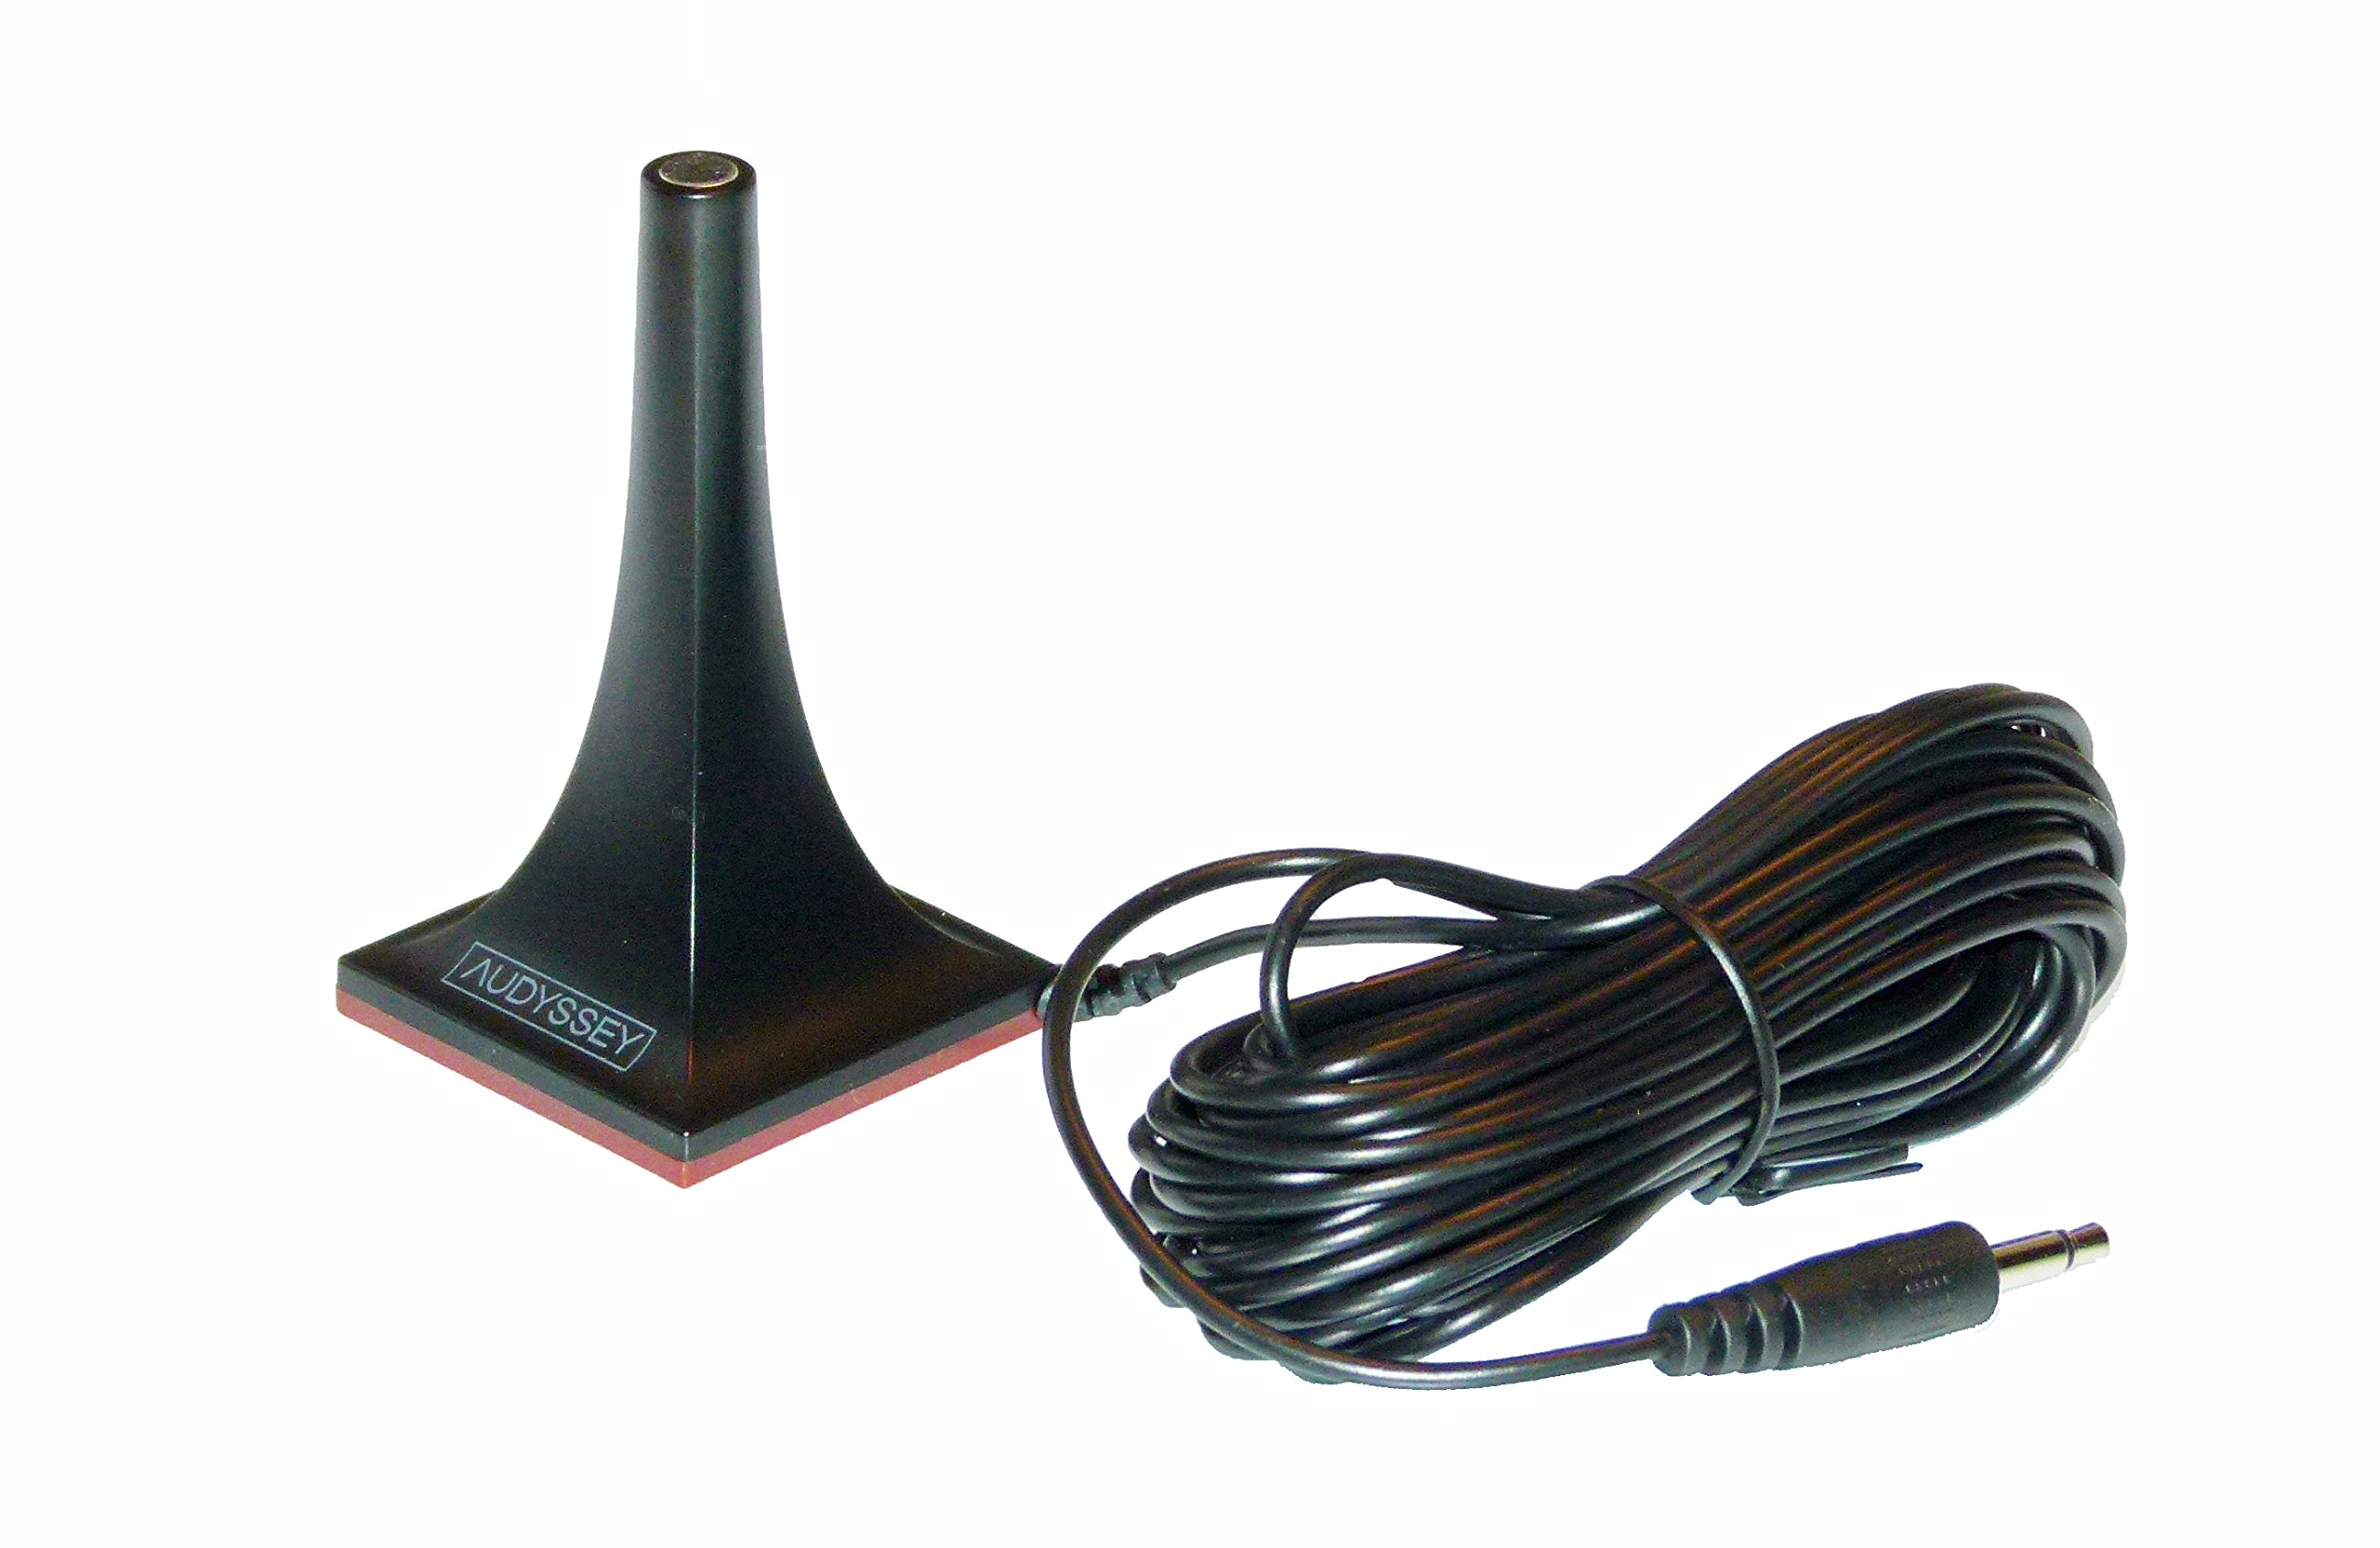 Denon Audyssey Sound Calibration Microphone - Specifically for AVRX2200, AVR-X2200, AVRX2300, AVR-X2300, AVRX3100, AVR-X3100